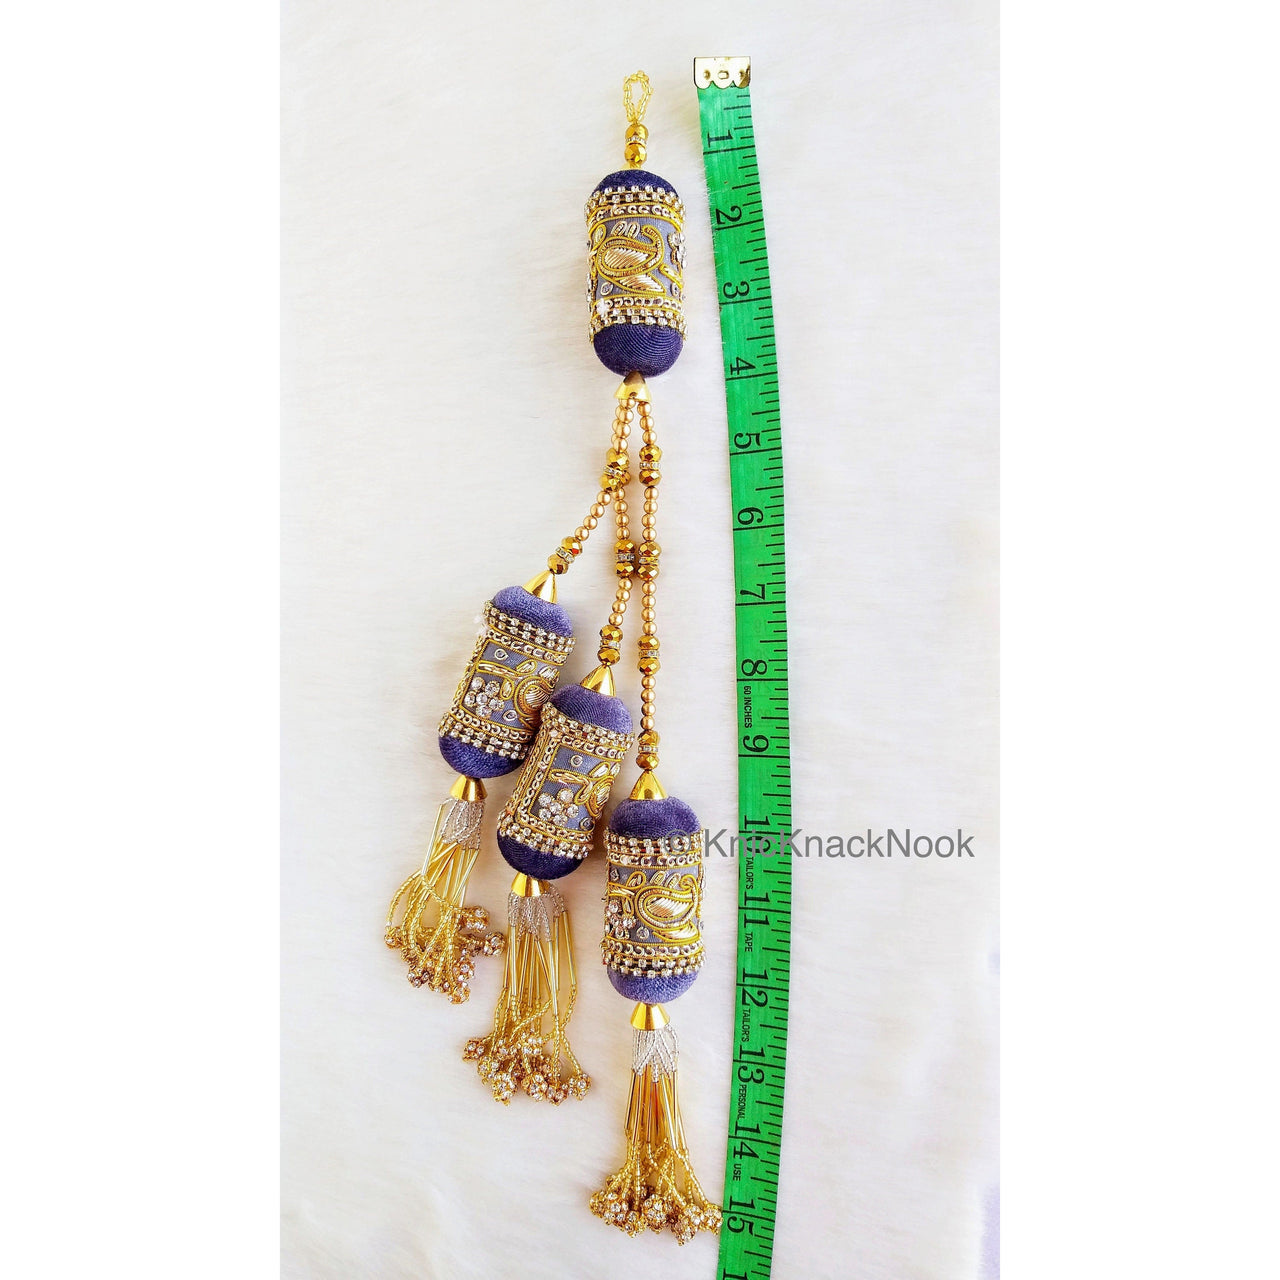 Velvet Fabric Bolster Tassels In Antique Gold Zardozi Embroidery, Rhinestones & Pearls, Indian Embellishment